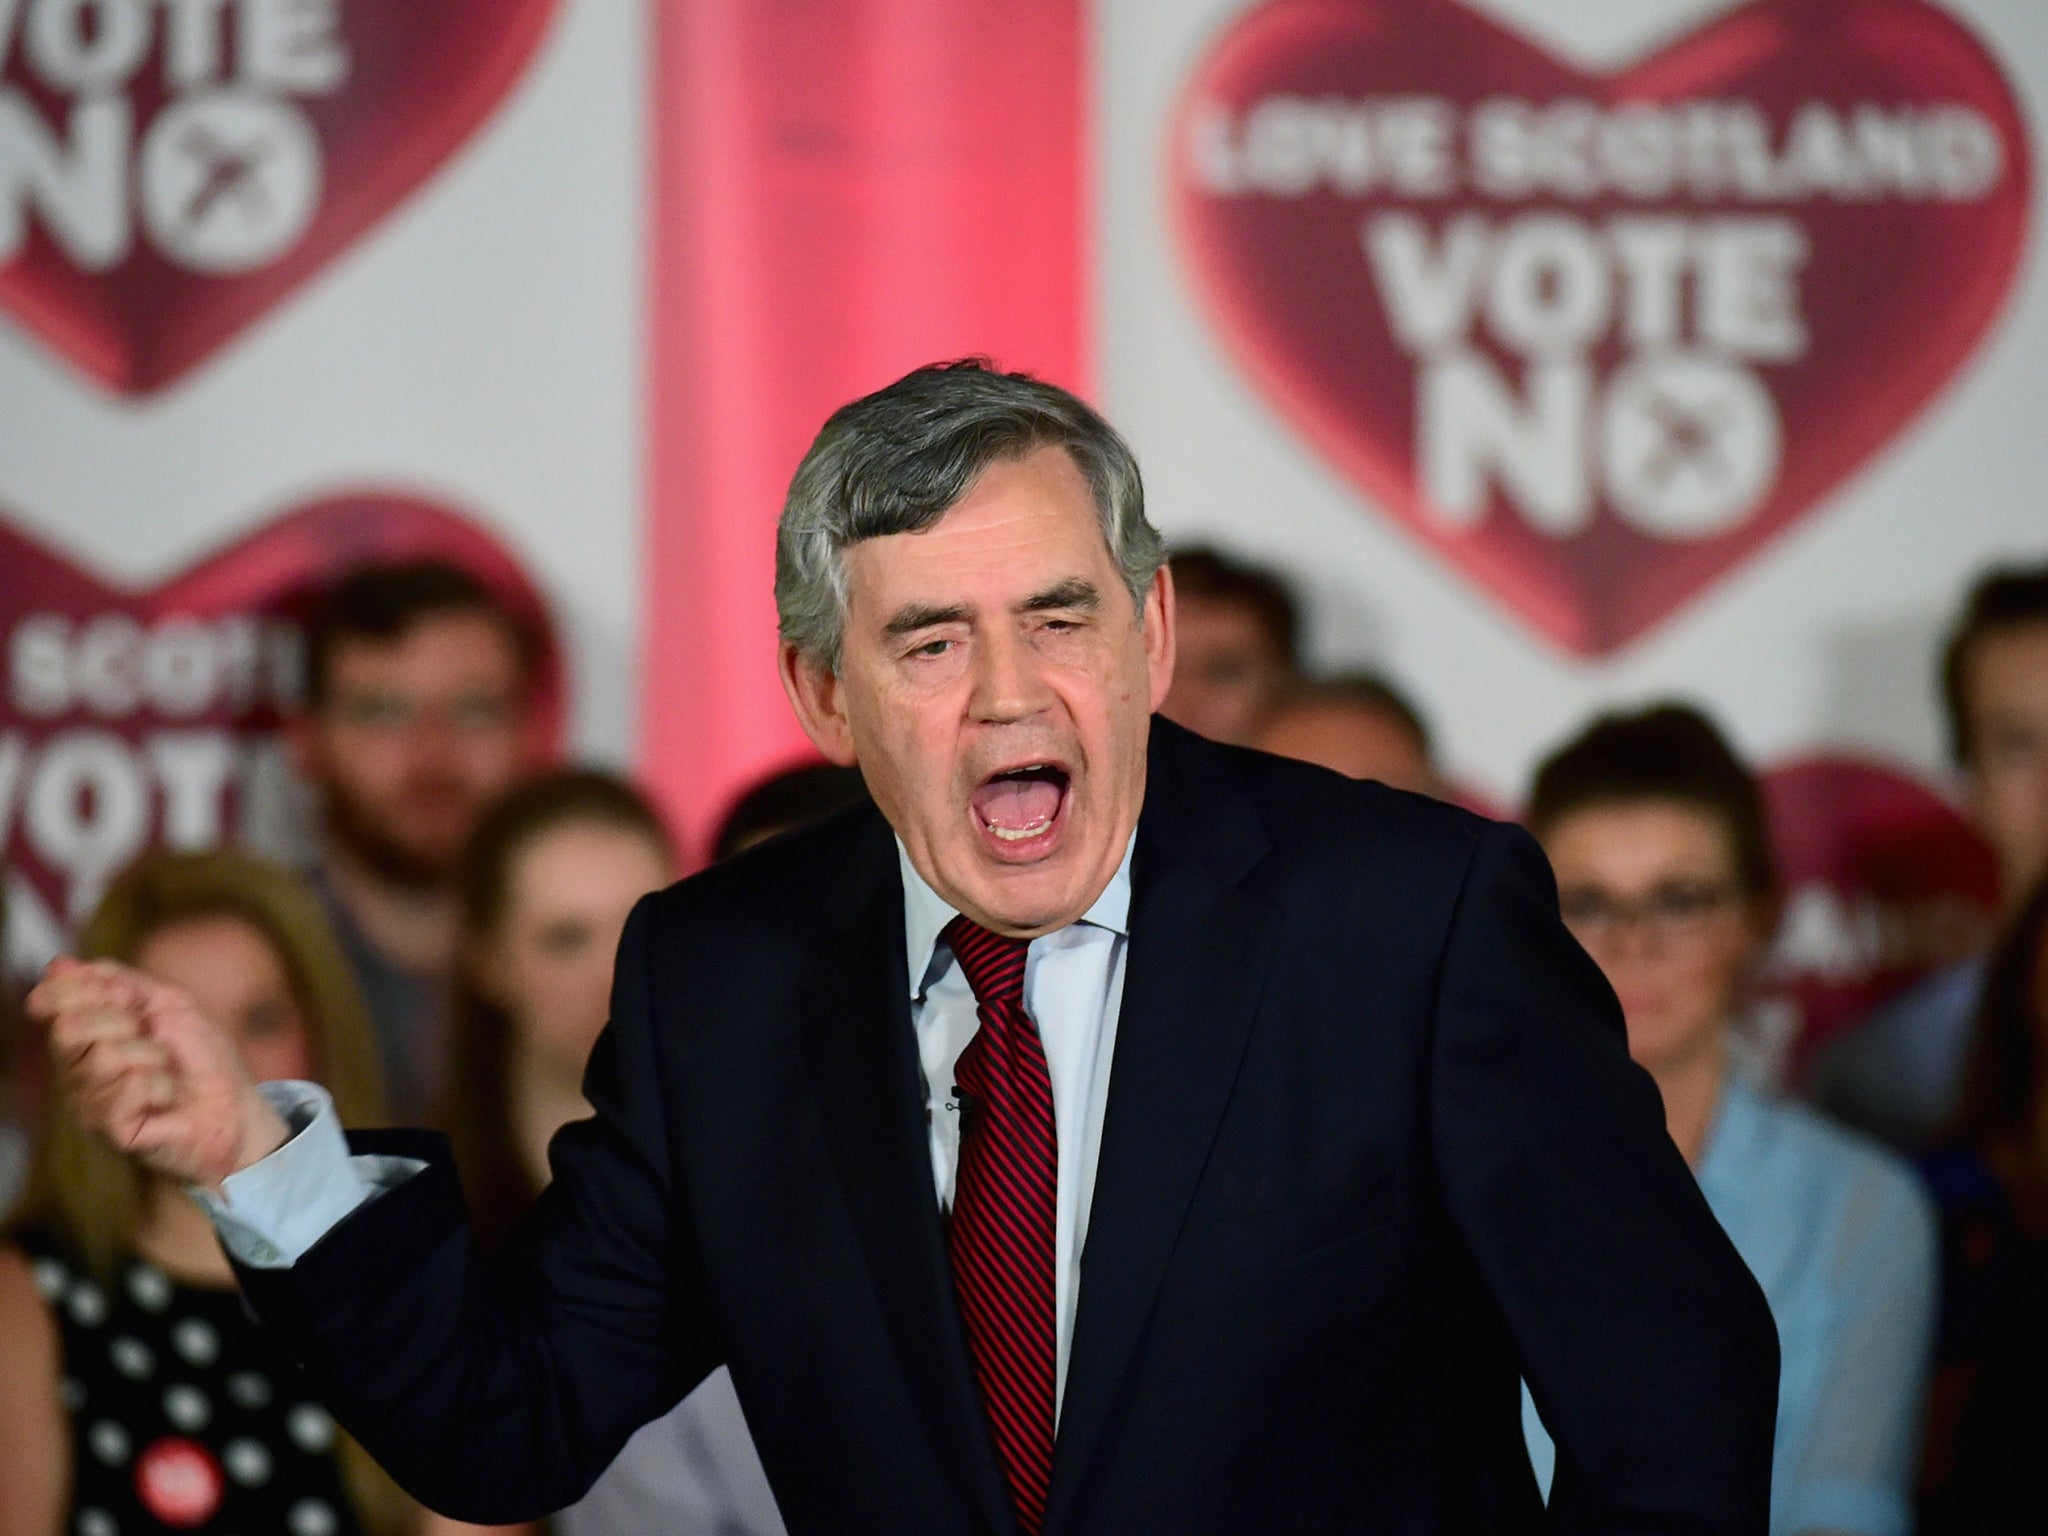 Gordon Brown makes his case for a No vote